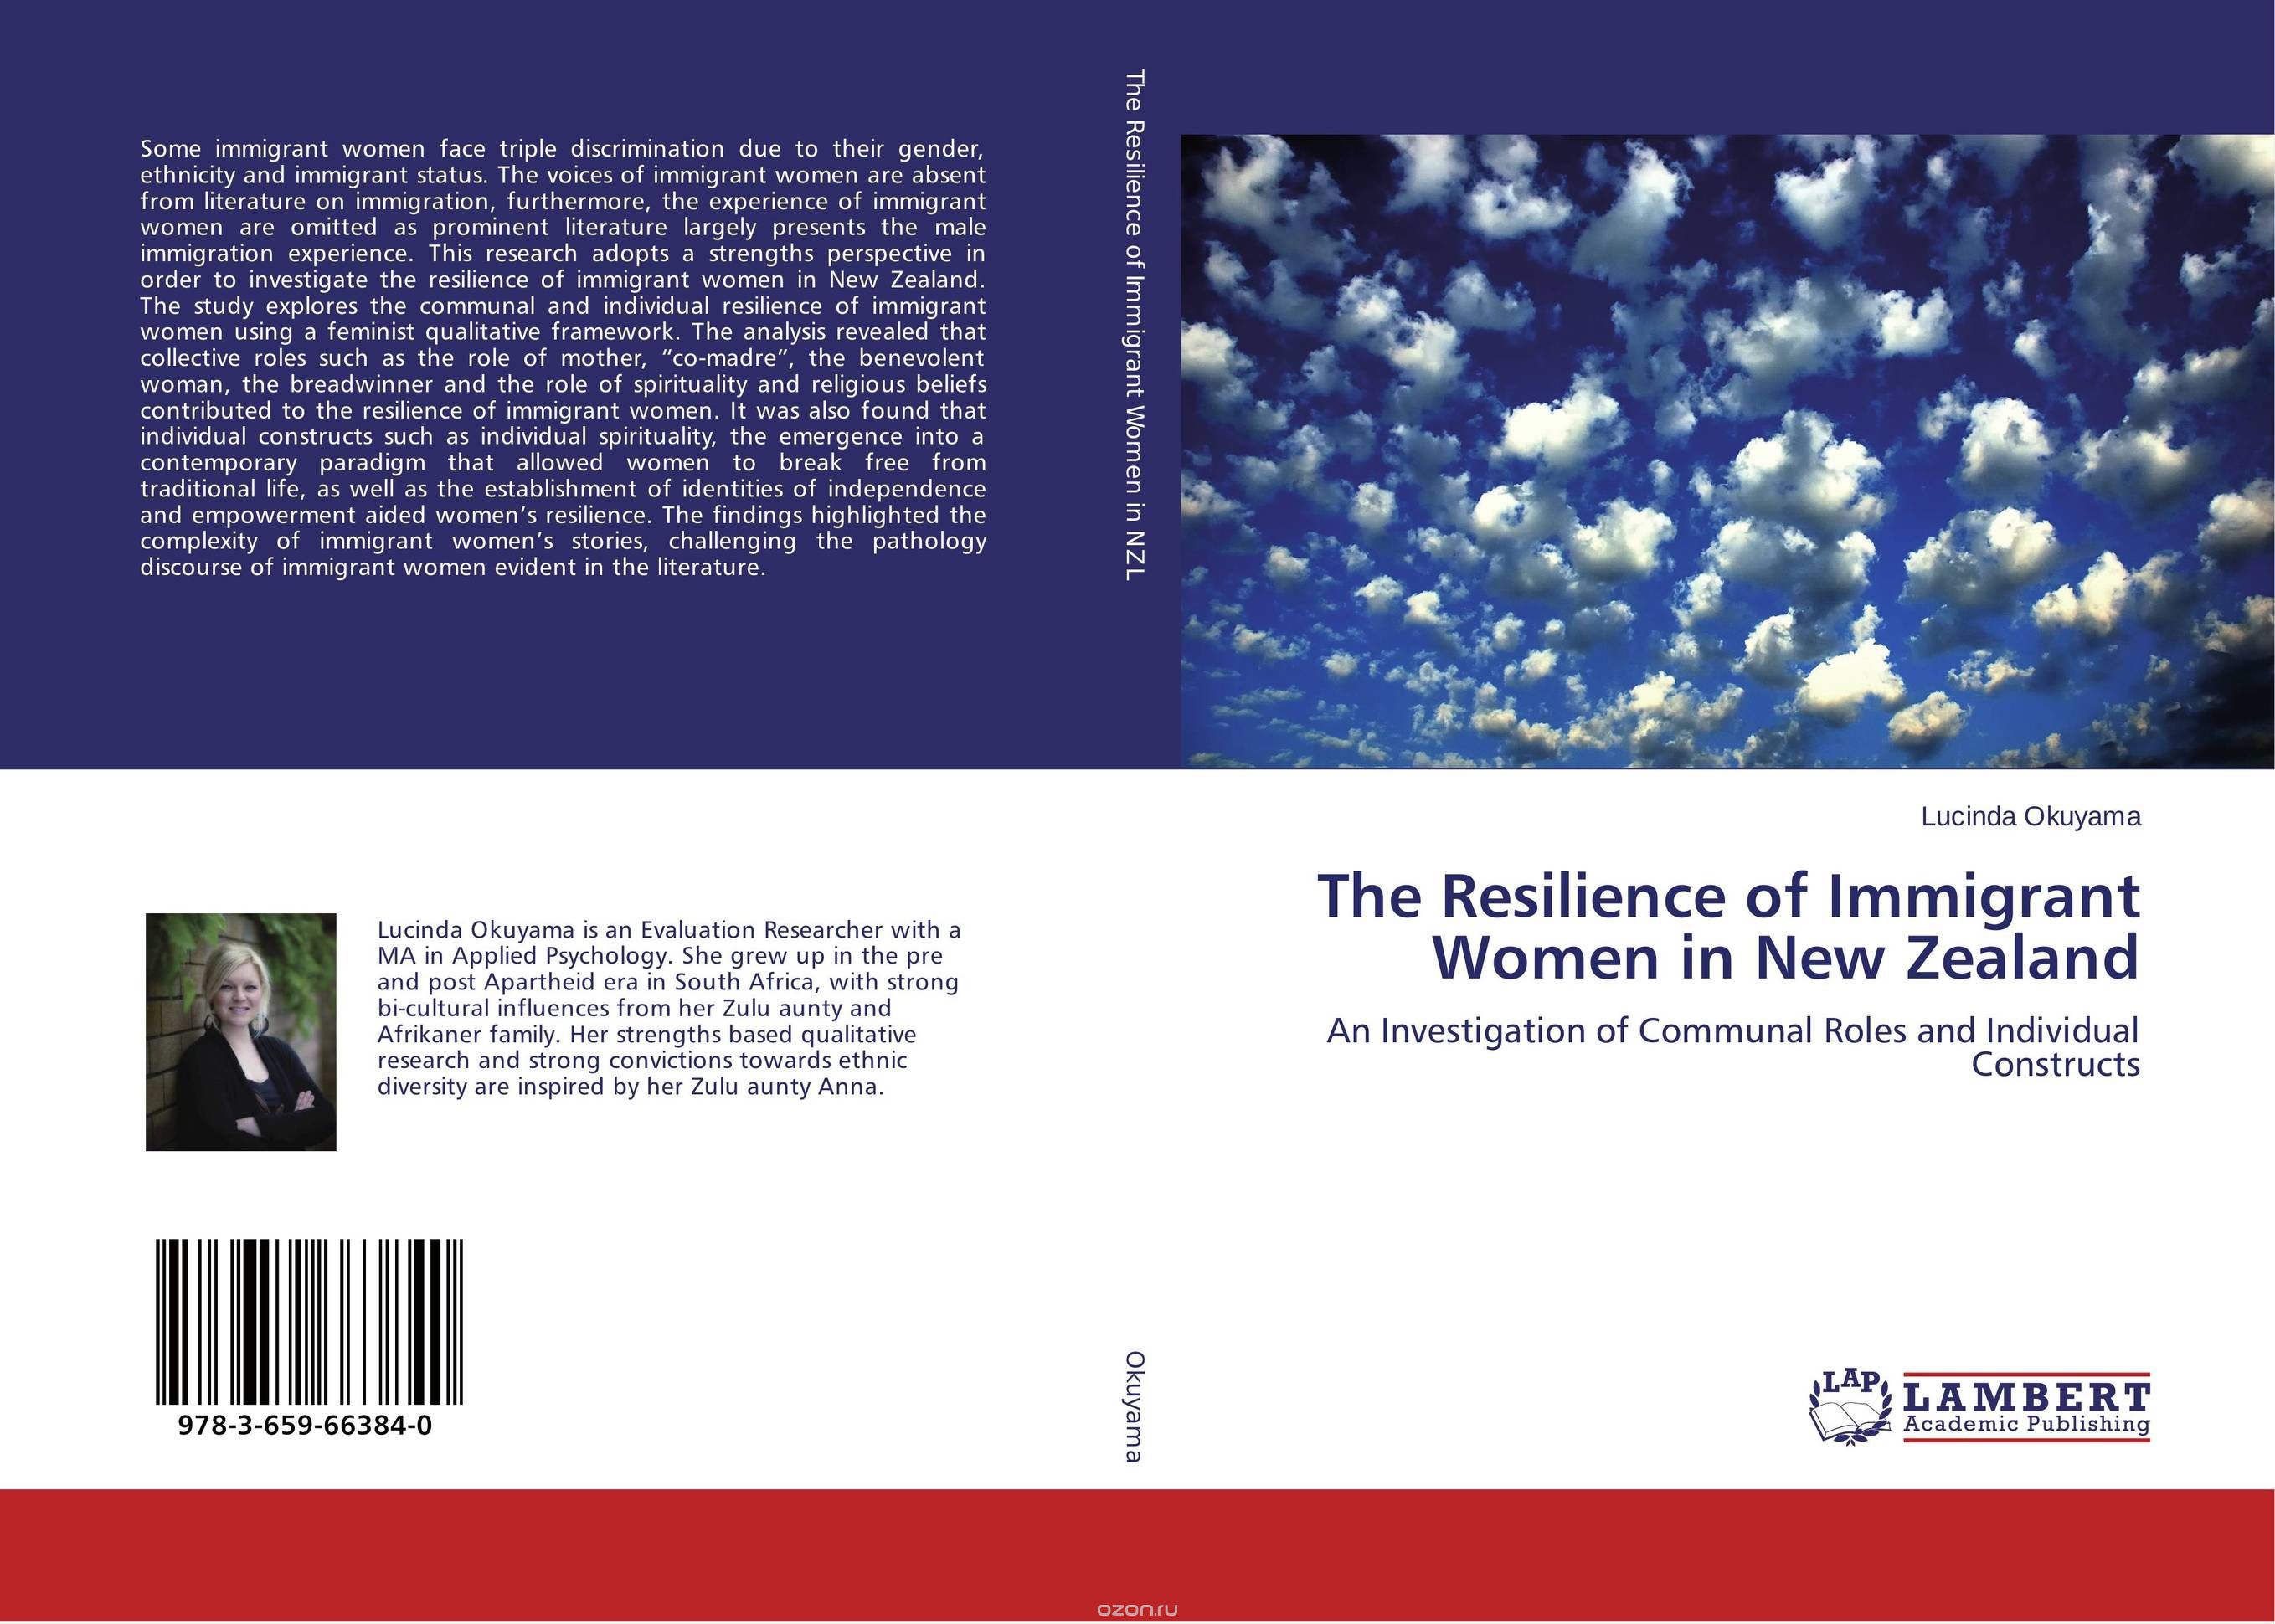 Скачать книгу "The Resilience of Immigrant Women in New Zealand"